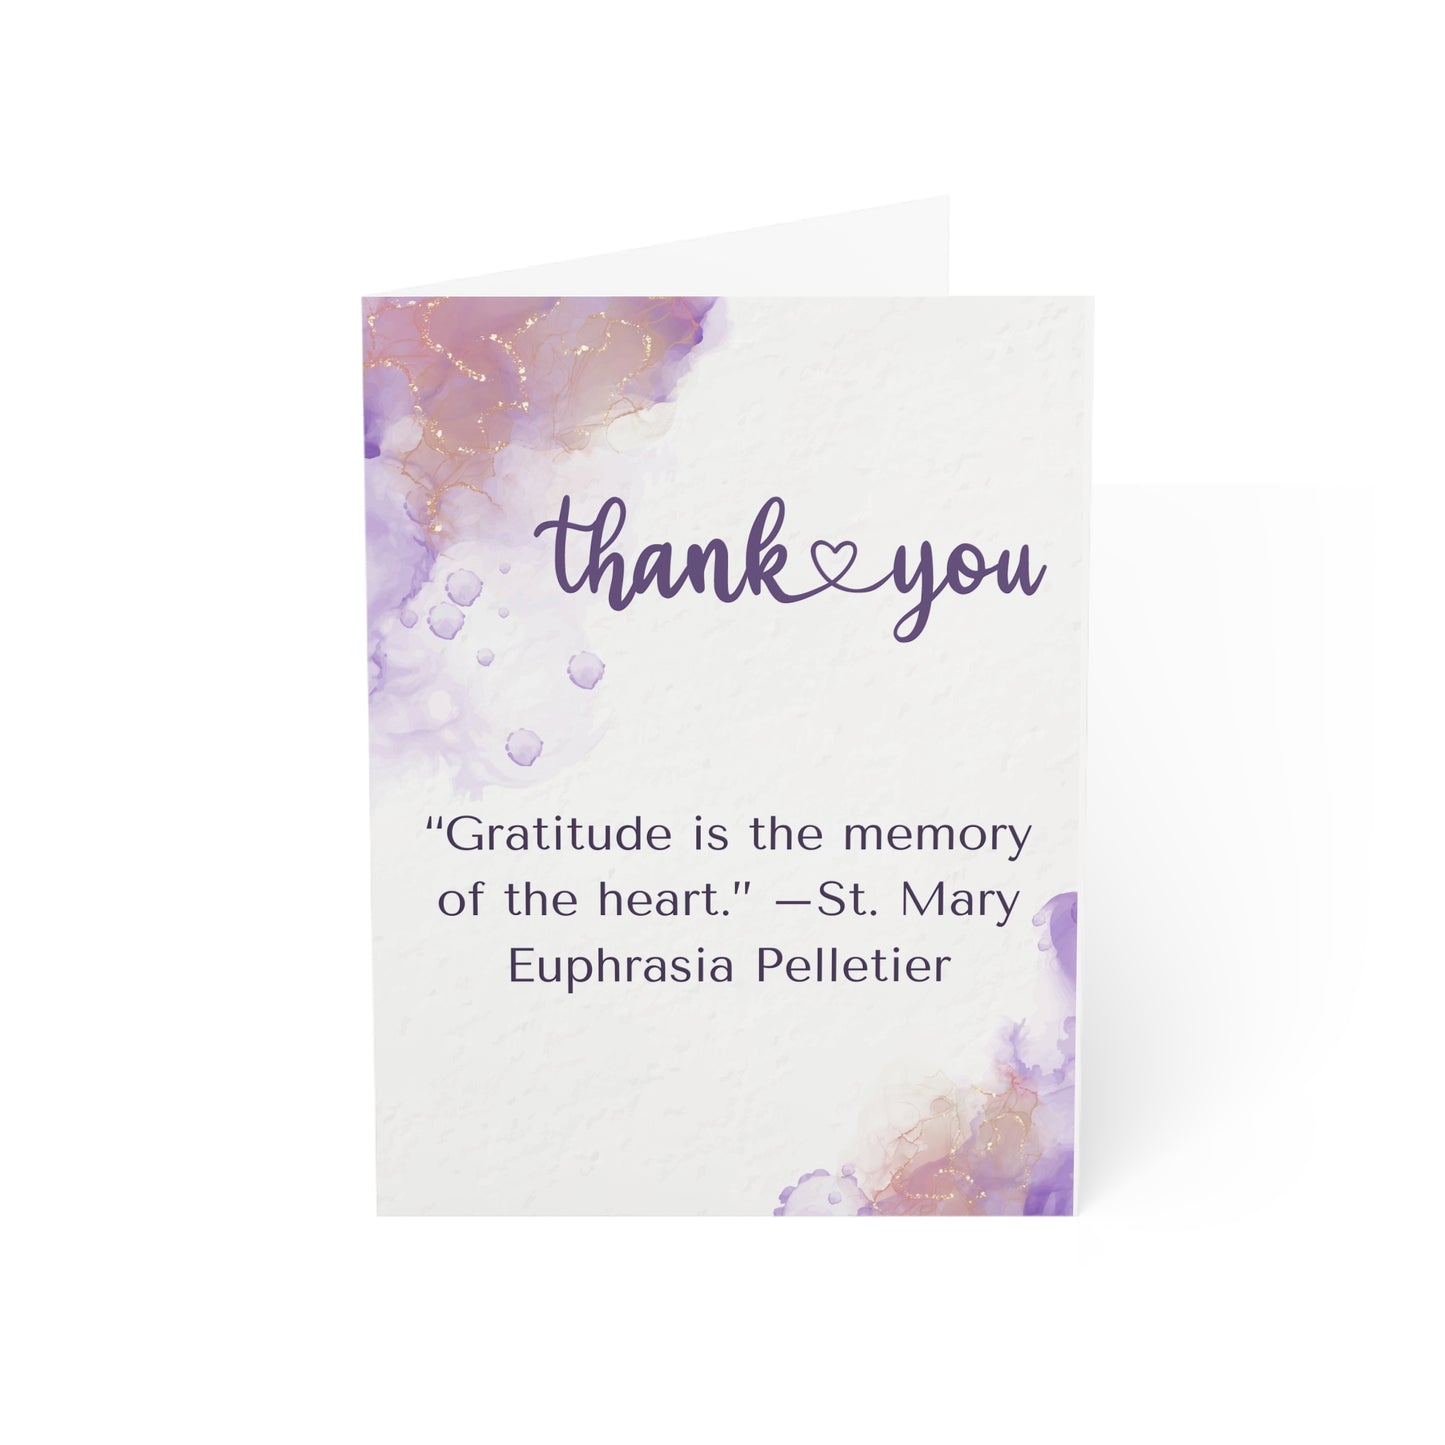 Thank you card ~ St. Mary Euphrasia Pelletier